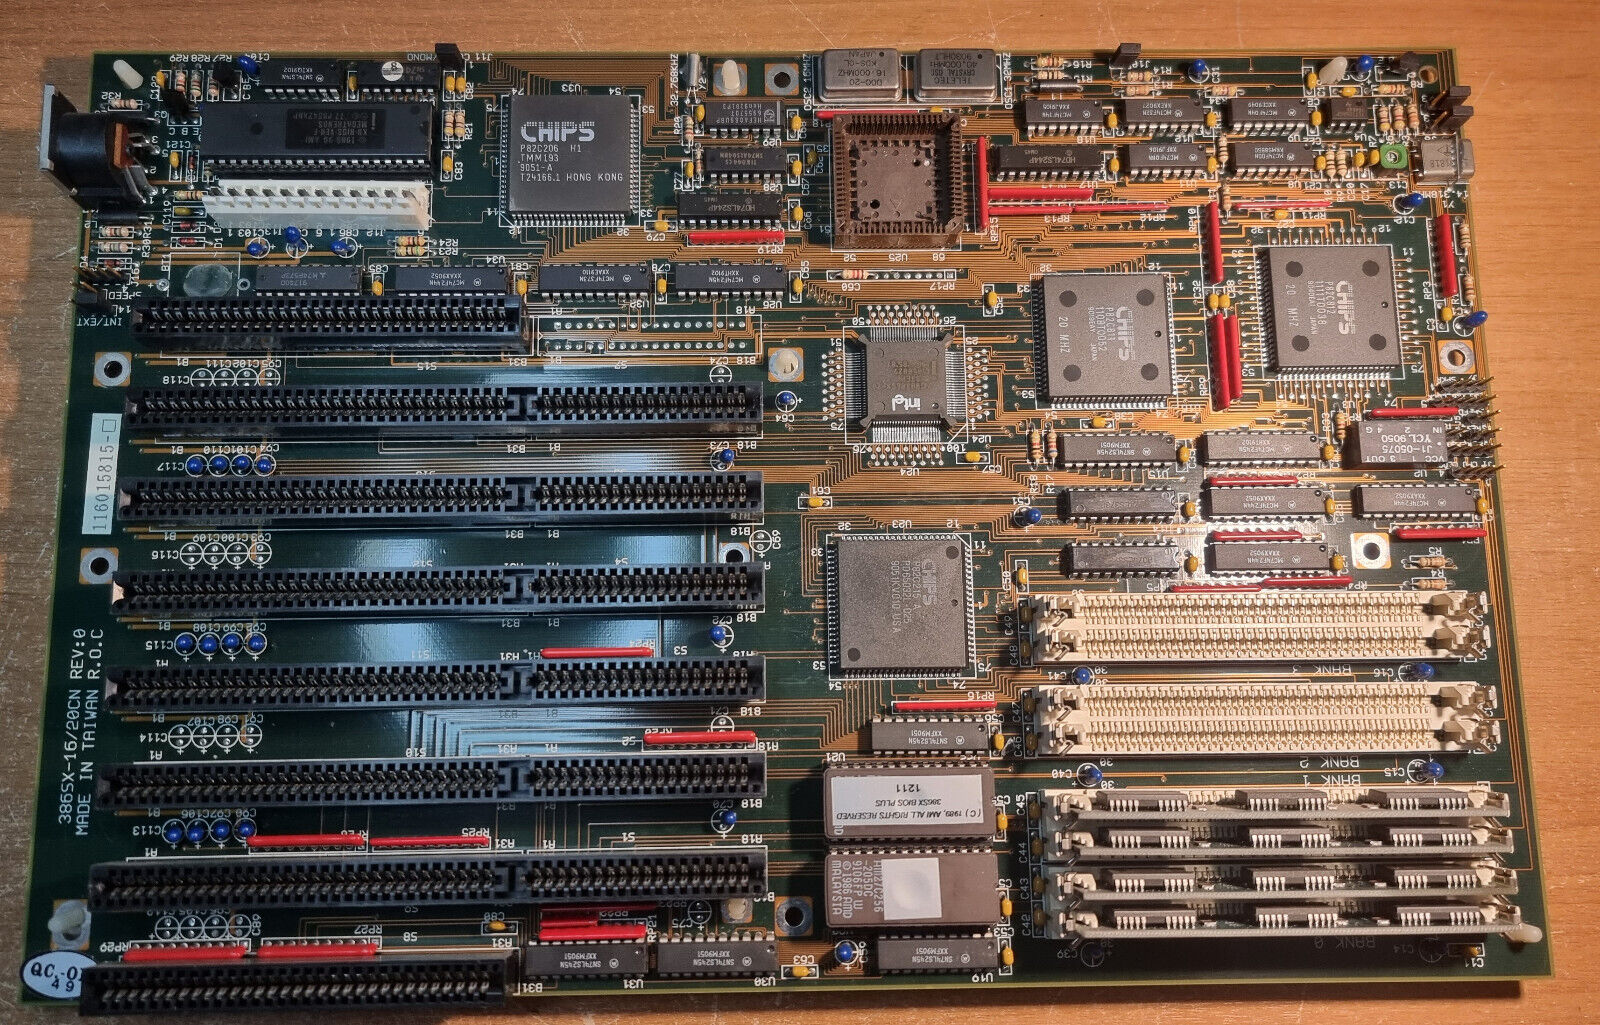 386SX-16/20CN rev:0 - 20Mhz motherboard